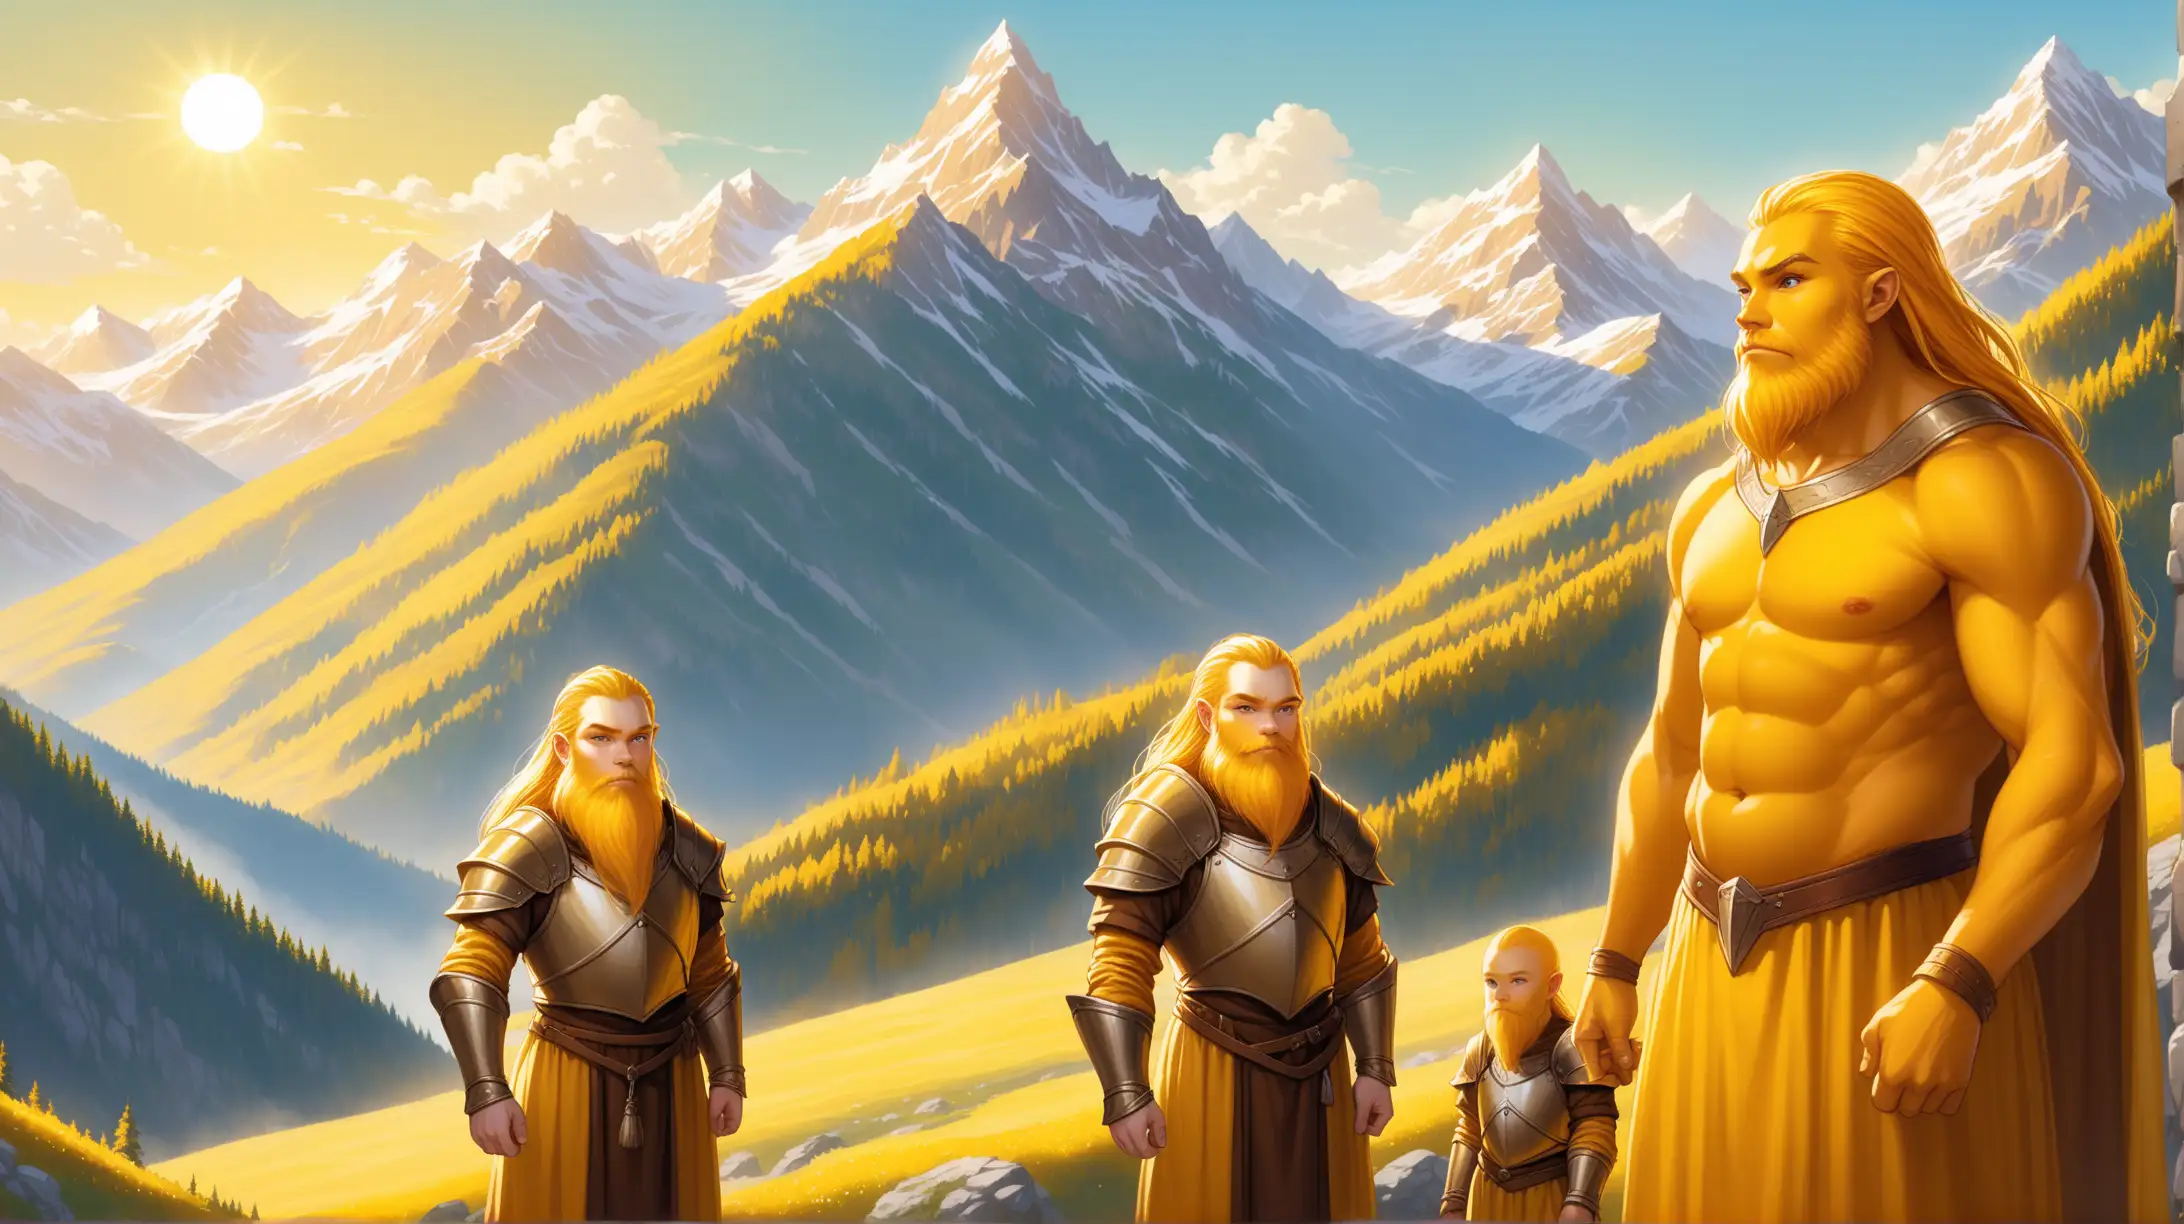 Golden Dwarf Couples in Sunlit Mountain Medieval Fantasy Art